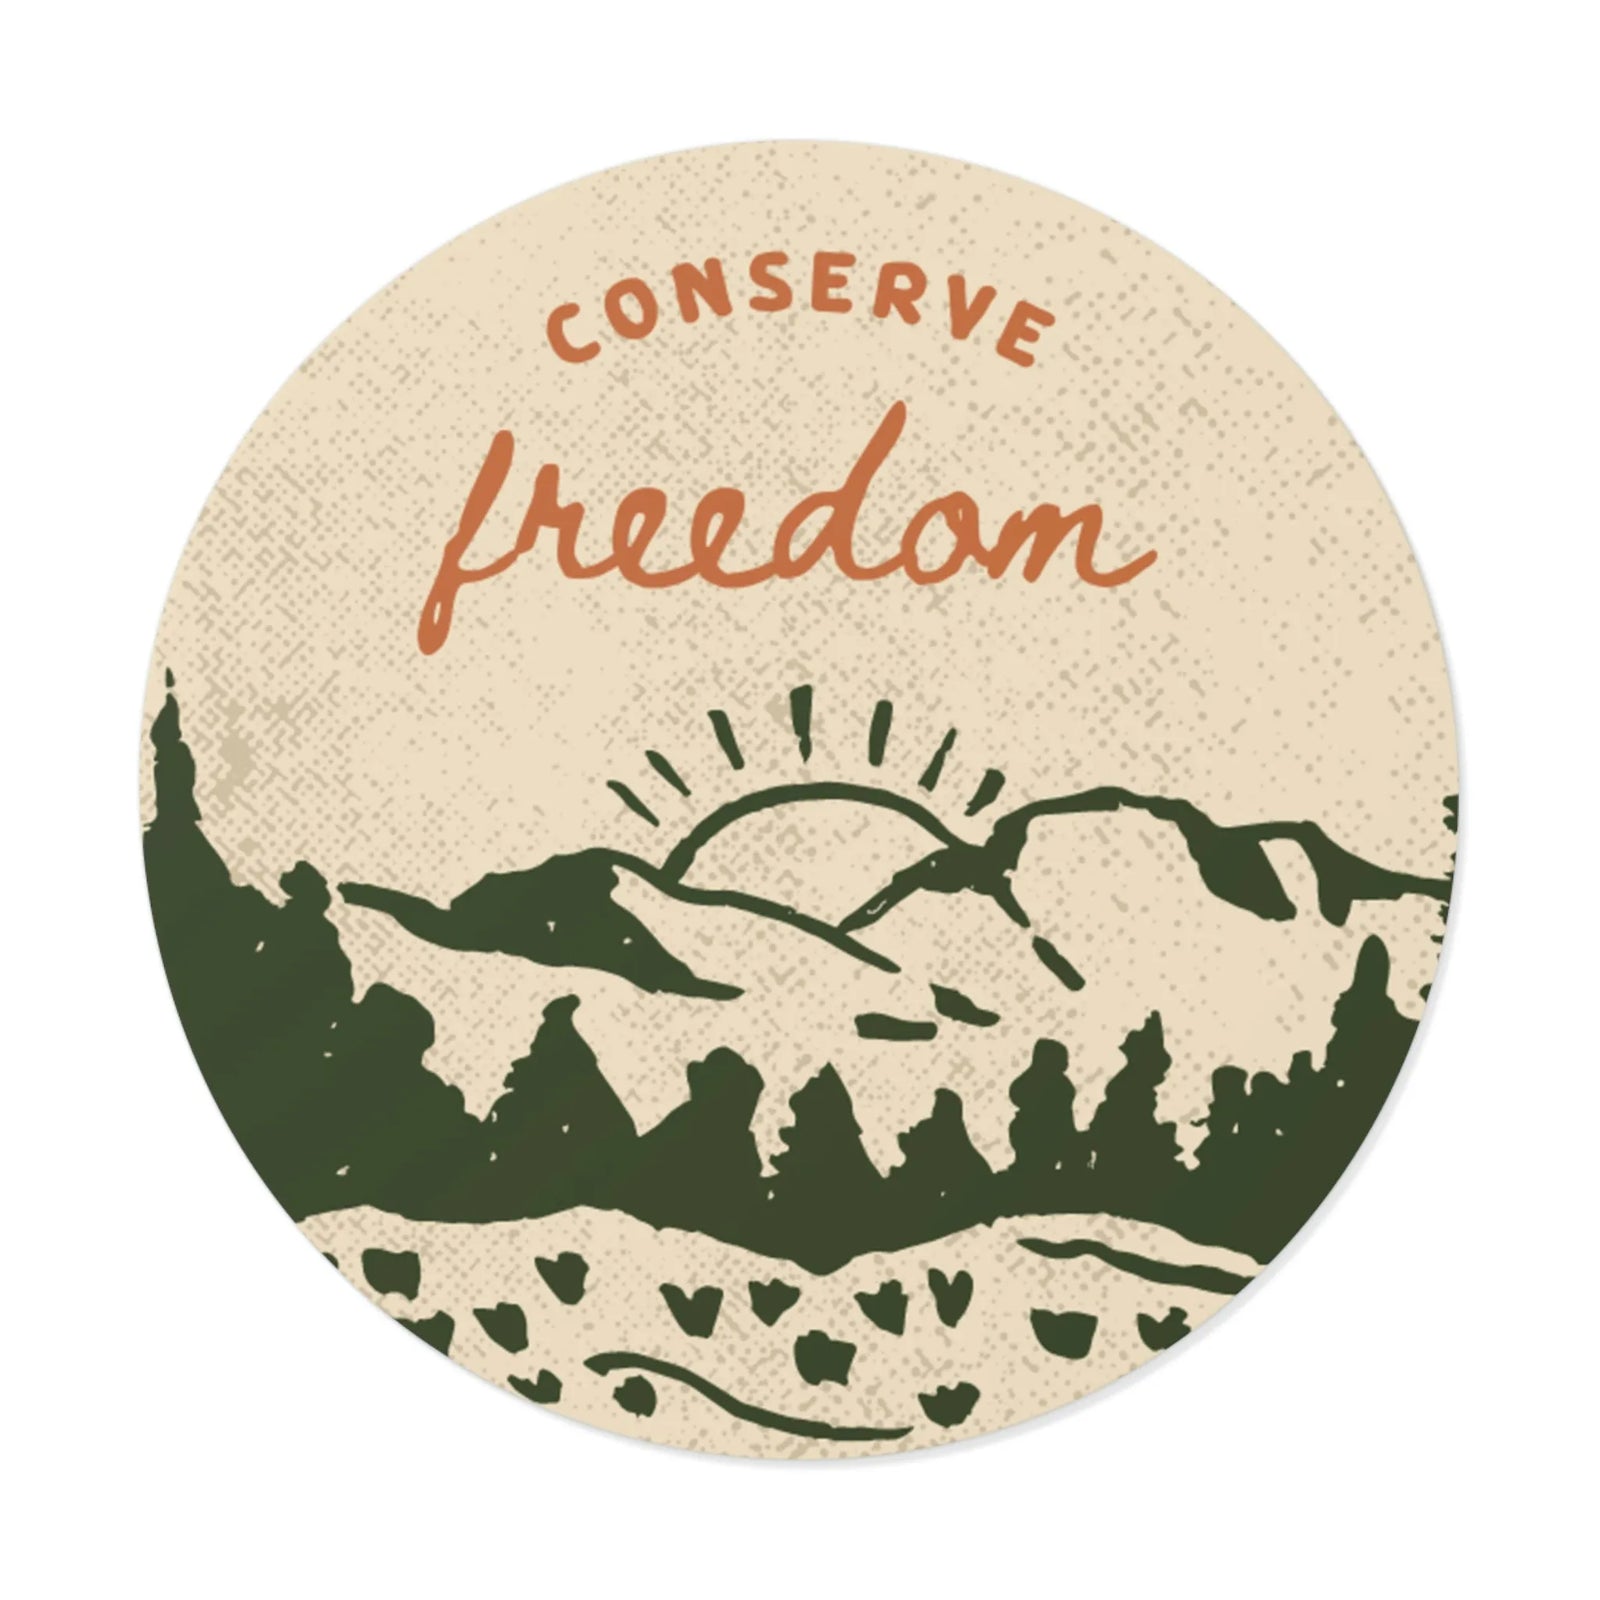 Conserve Freedom Vinyl Sticker